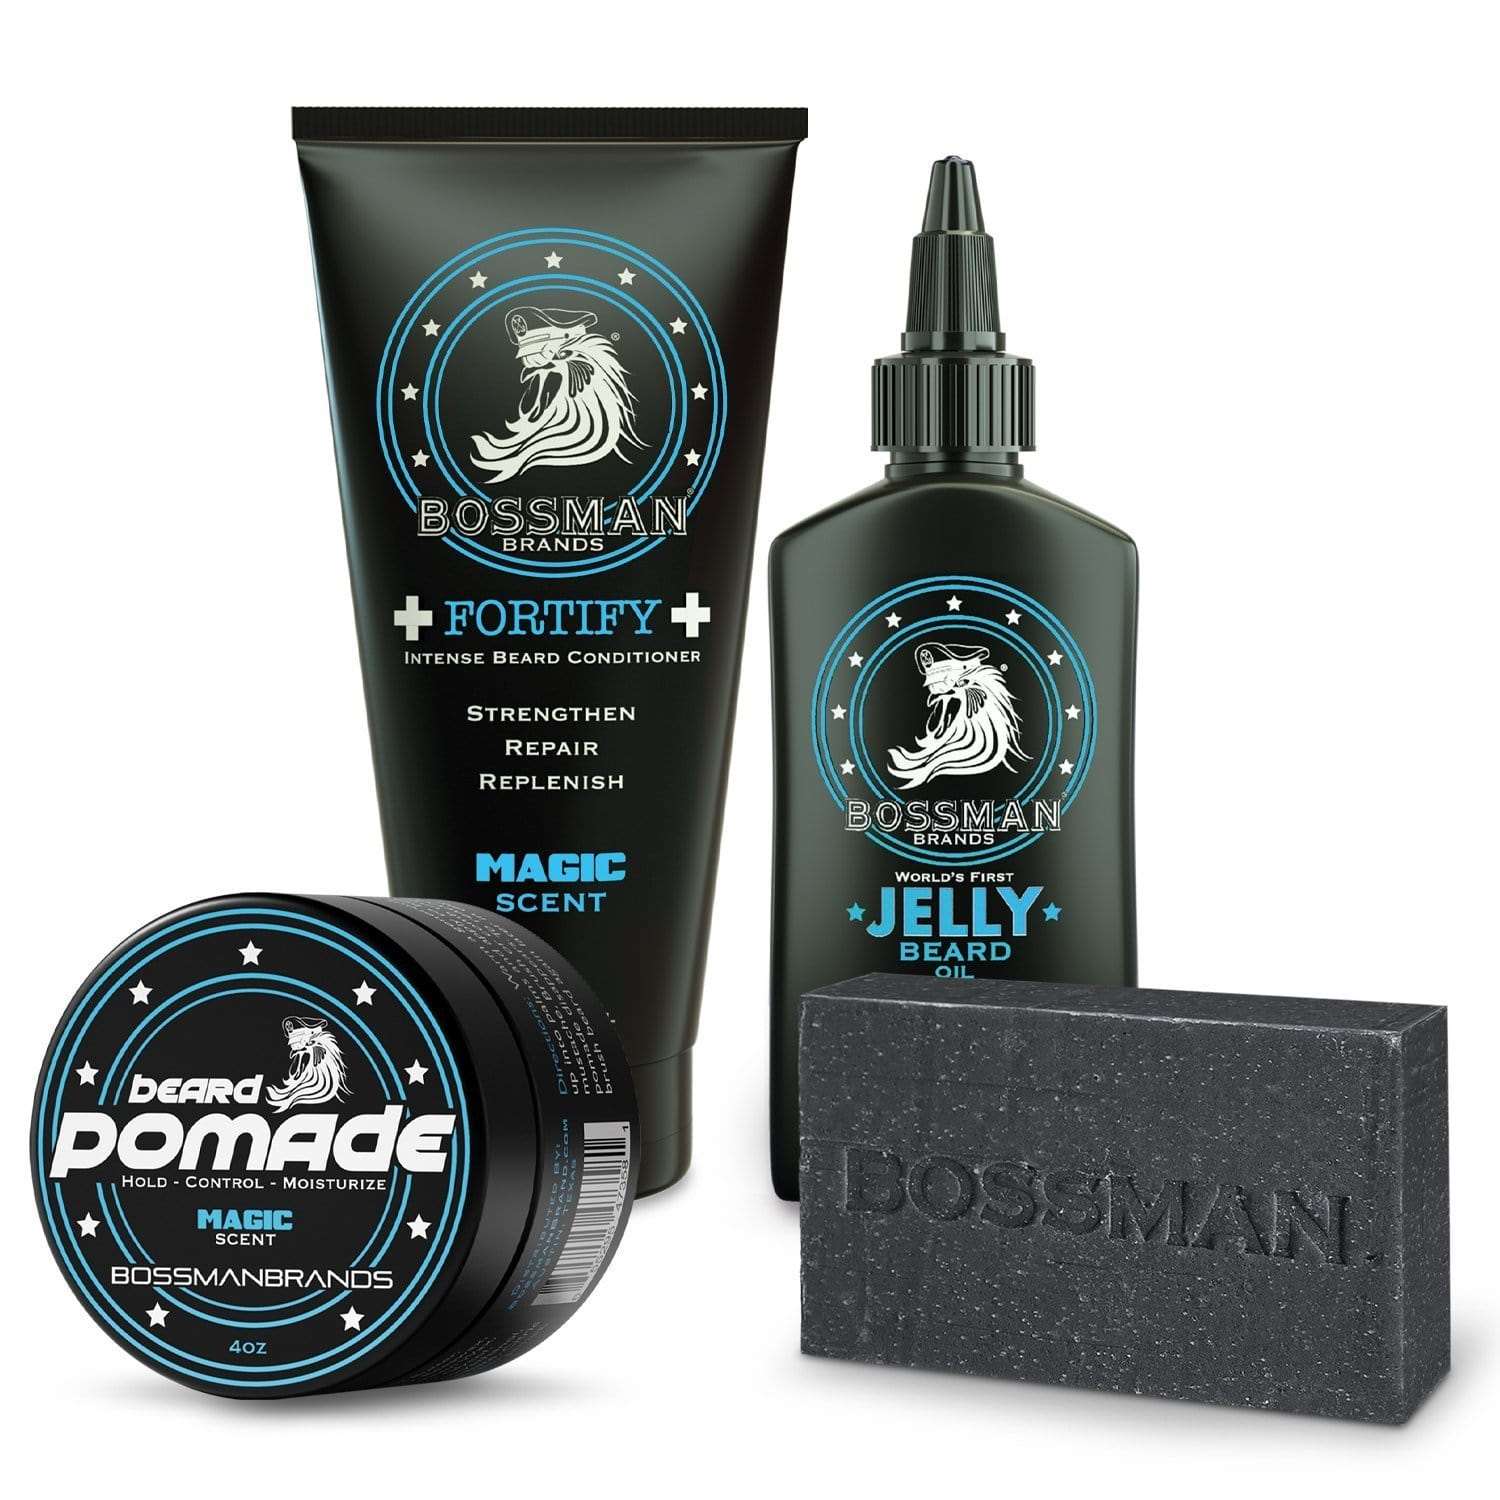 The Professional Beard Kit Bossman Brands